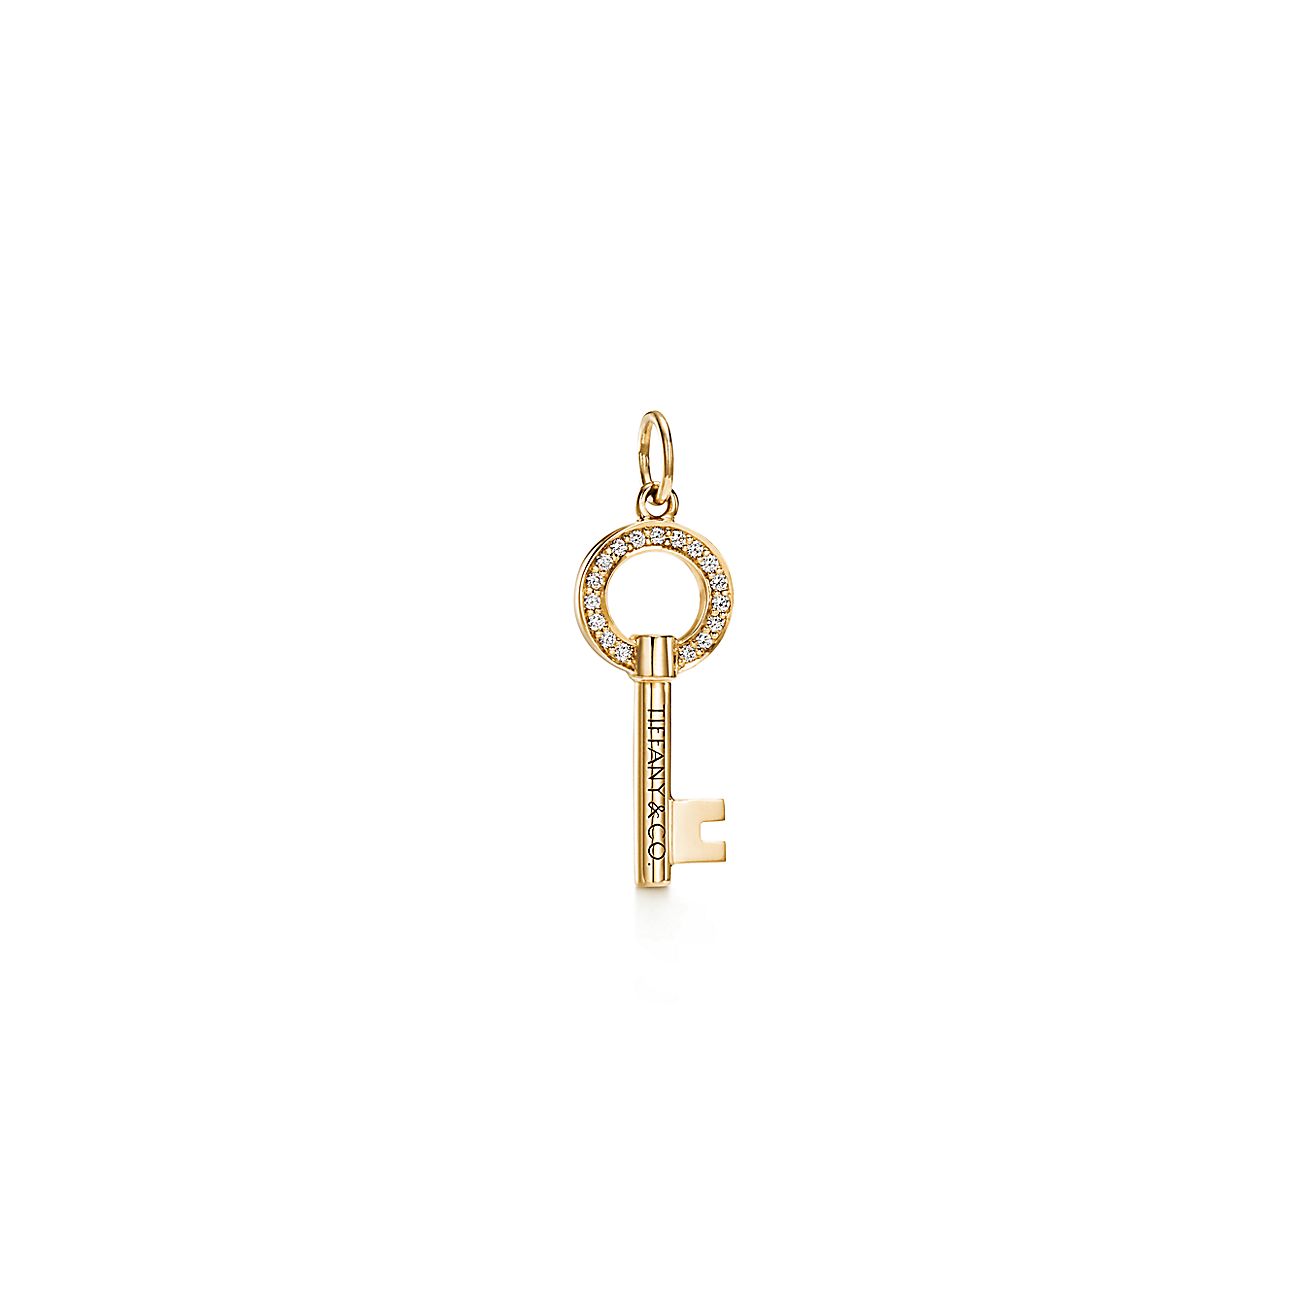 Tiffany Keys modern keys open round key pendant in 18k gold with diamonds,  mini.